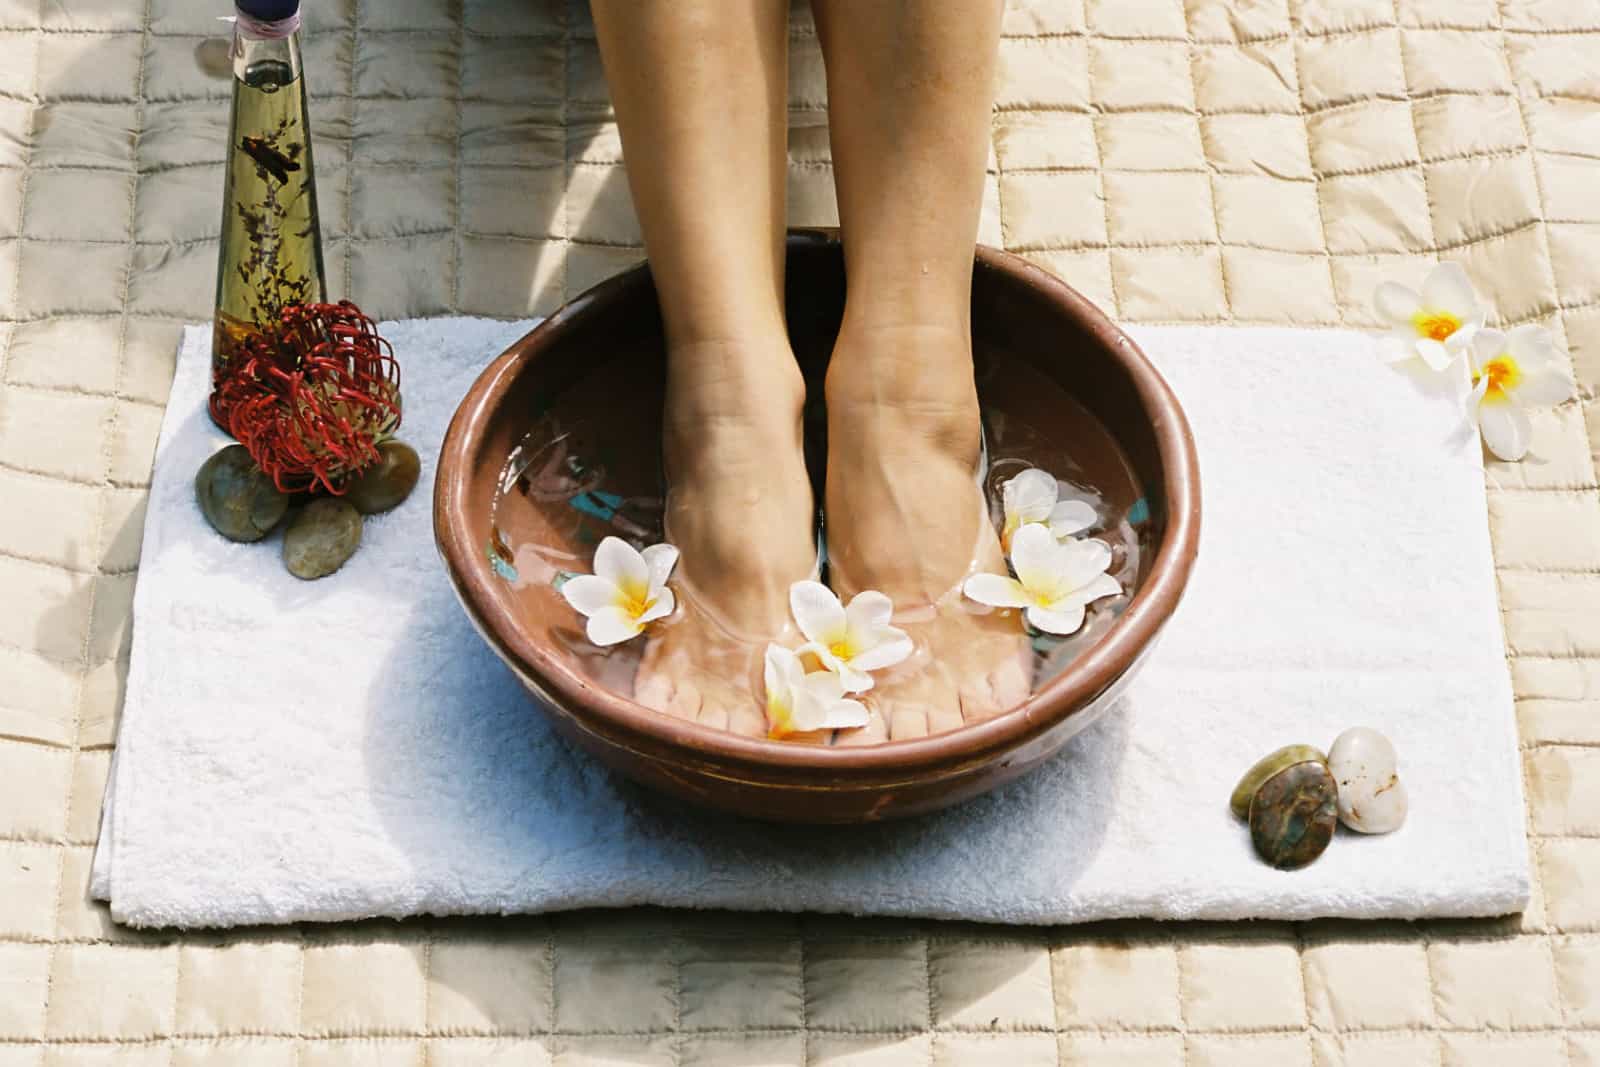 woman prepares a foot soak with used tea bags